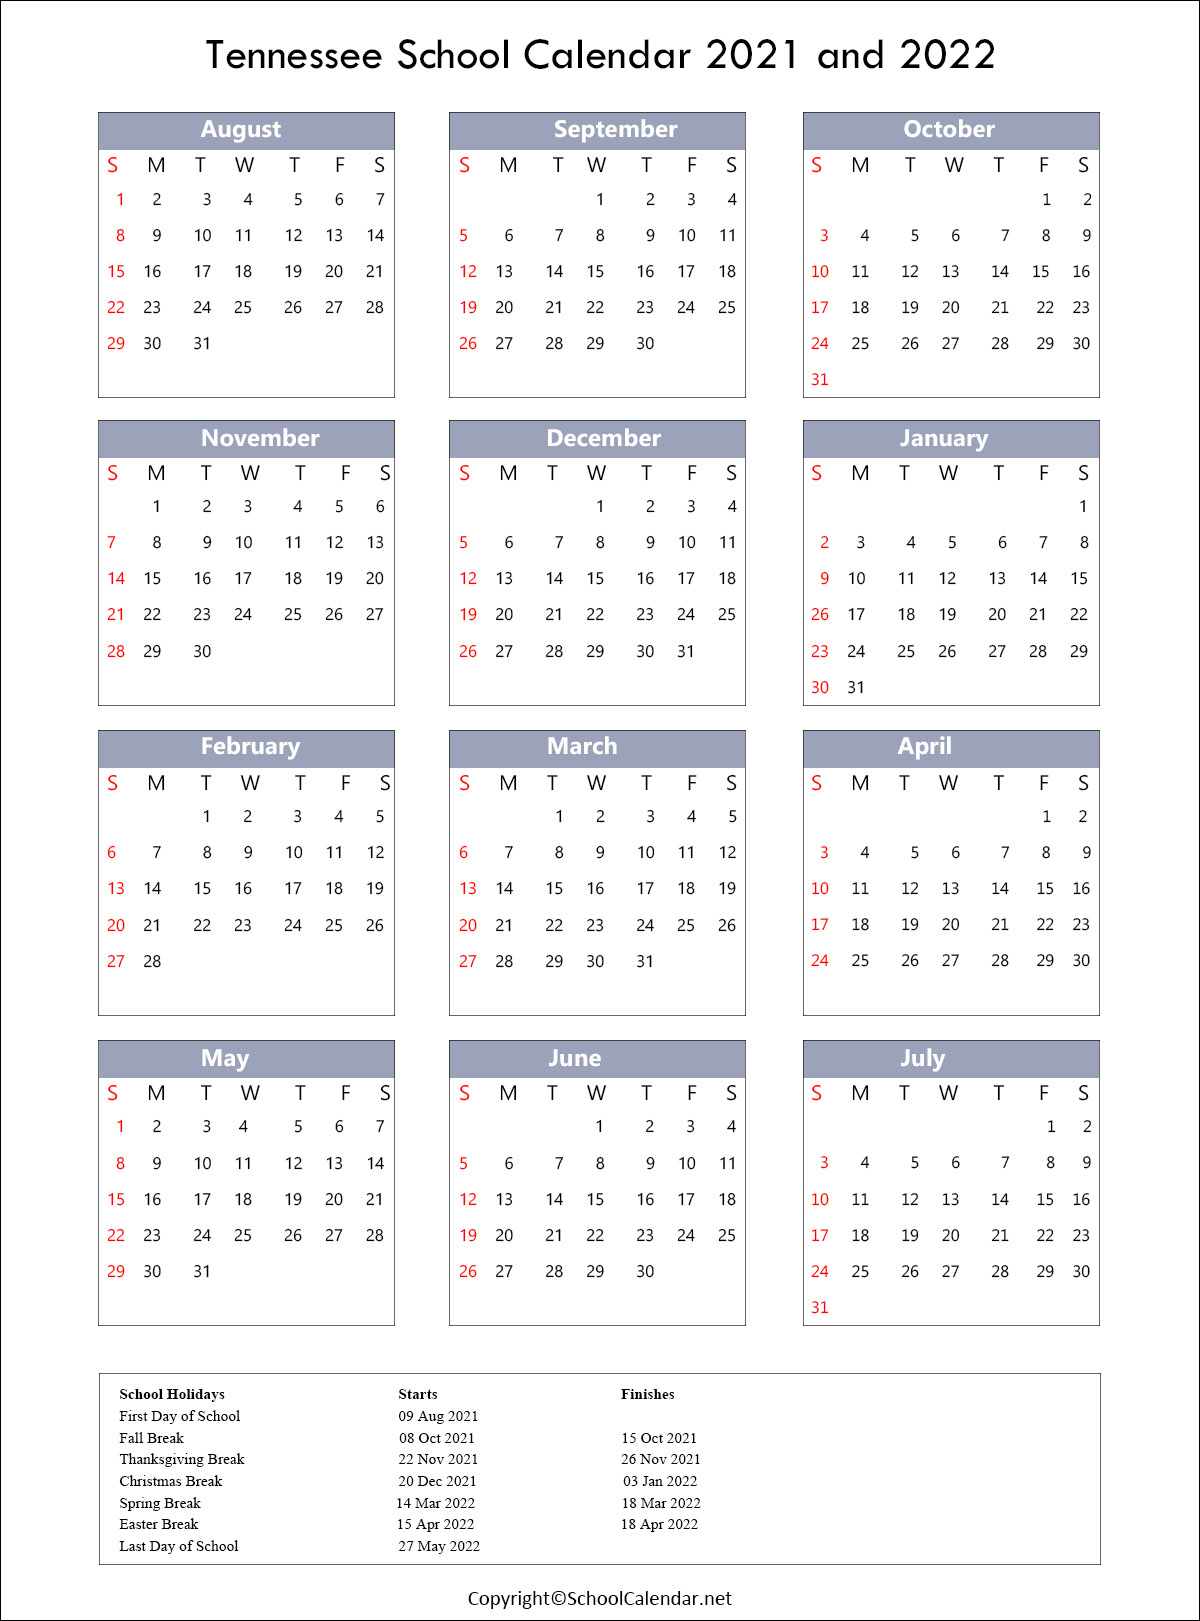 Tennessee School Calendar 2021-2022 [County School District]